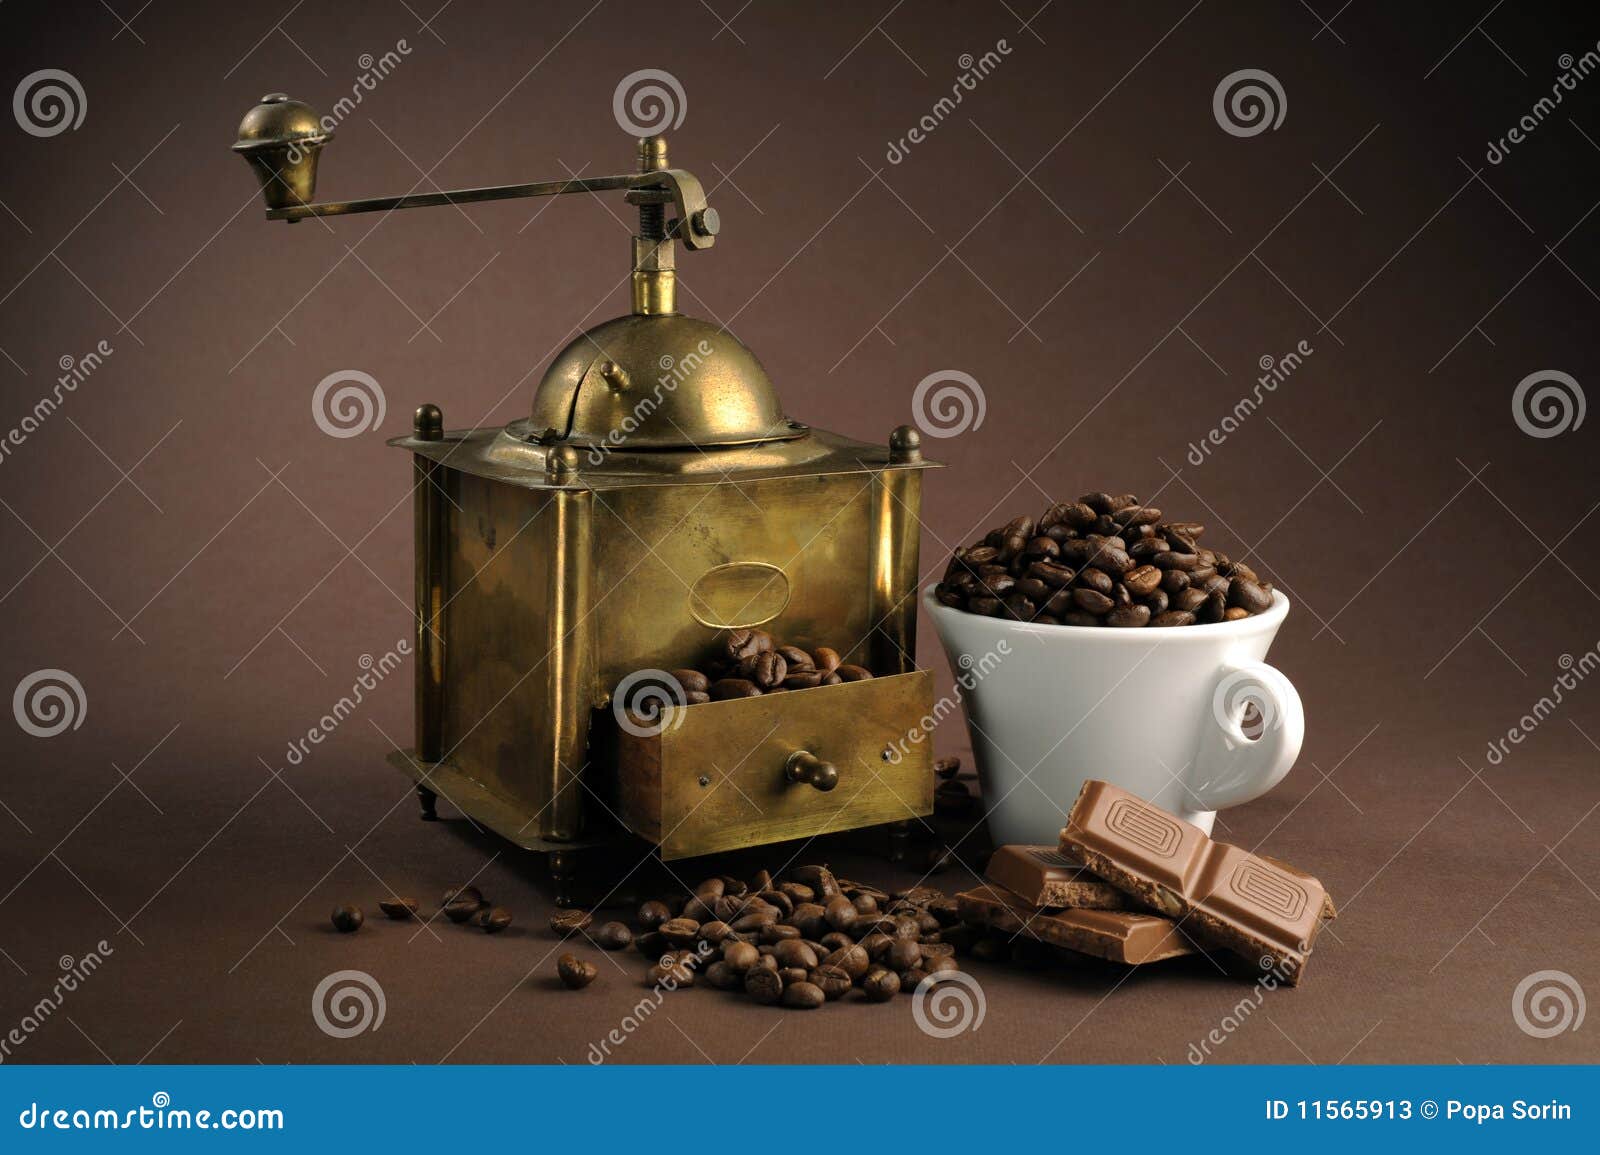 antiquity coffee machine